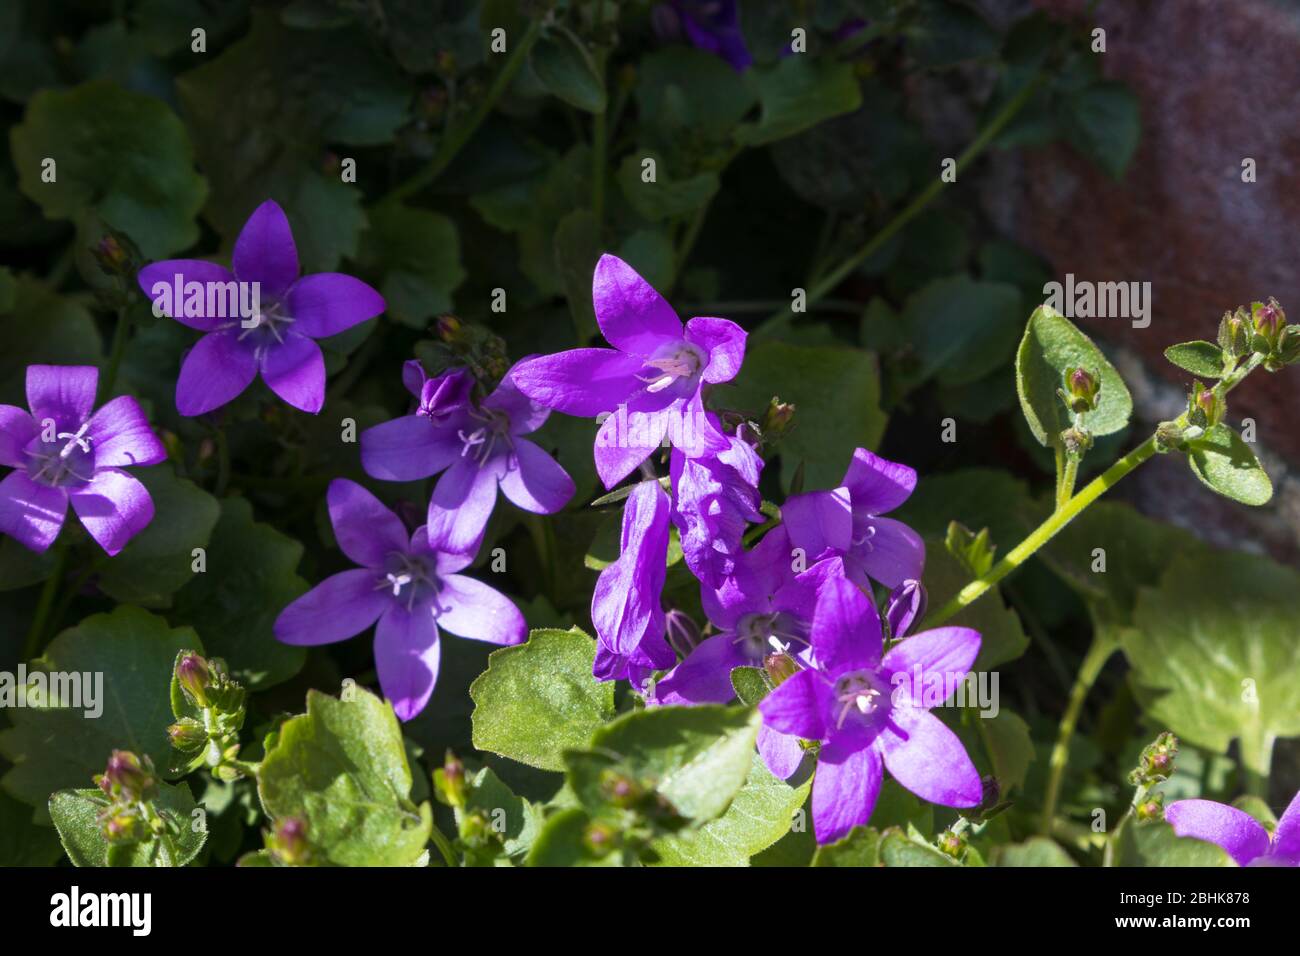 purple bellflower, uk garden Stock Photo